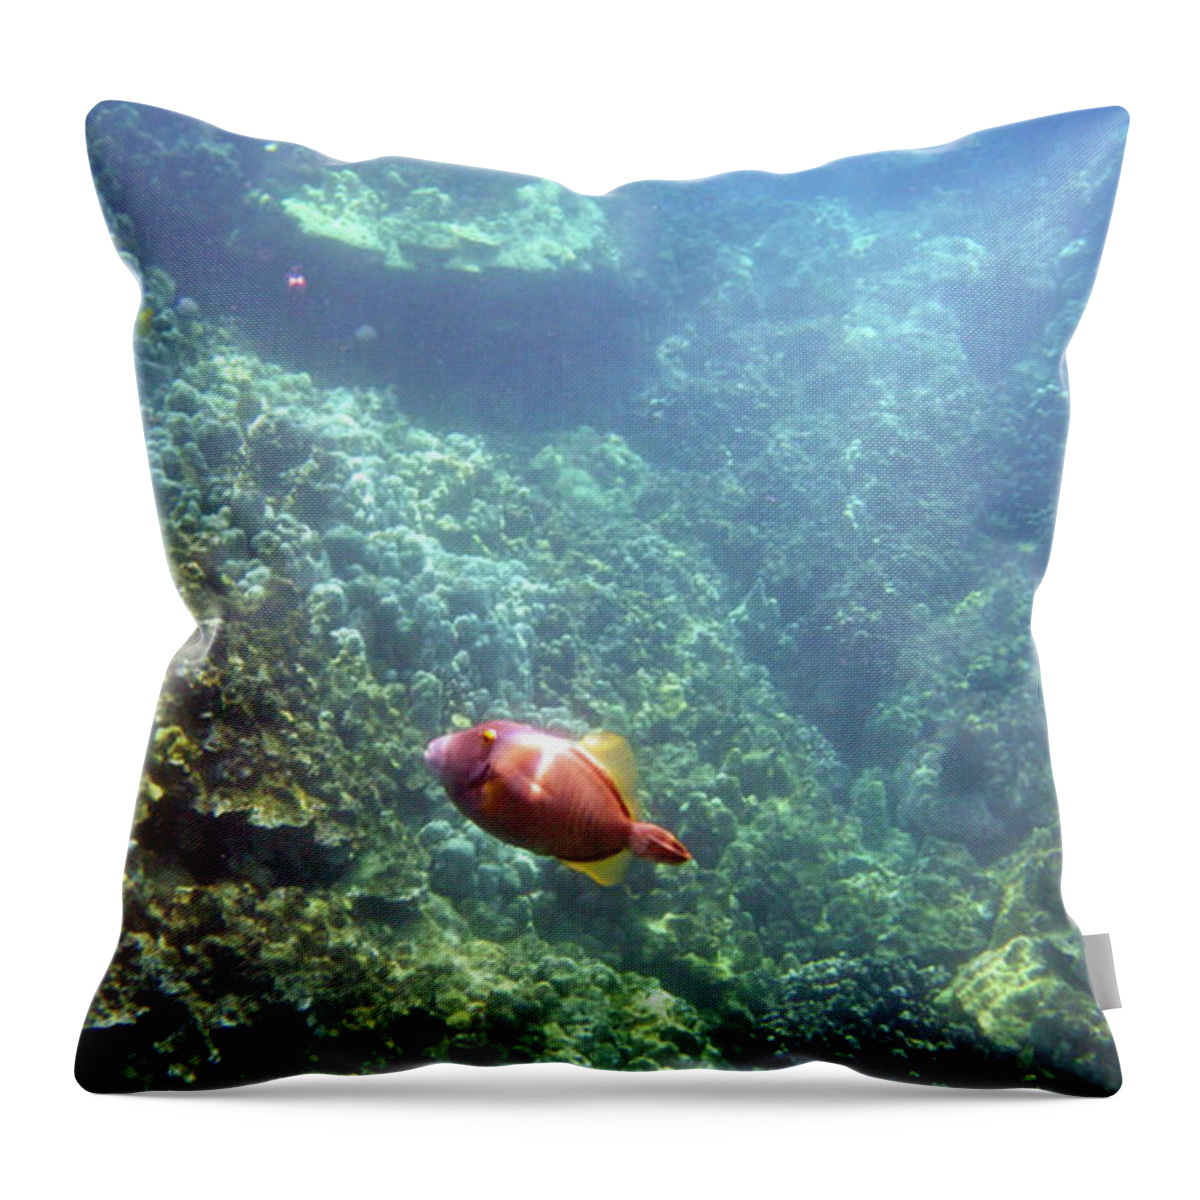 Underwater Photography Throw Pillow featuring the photograph Cute Fellow by Karen Nicholson